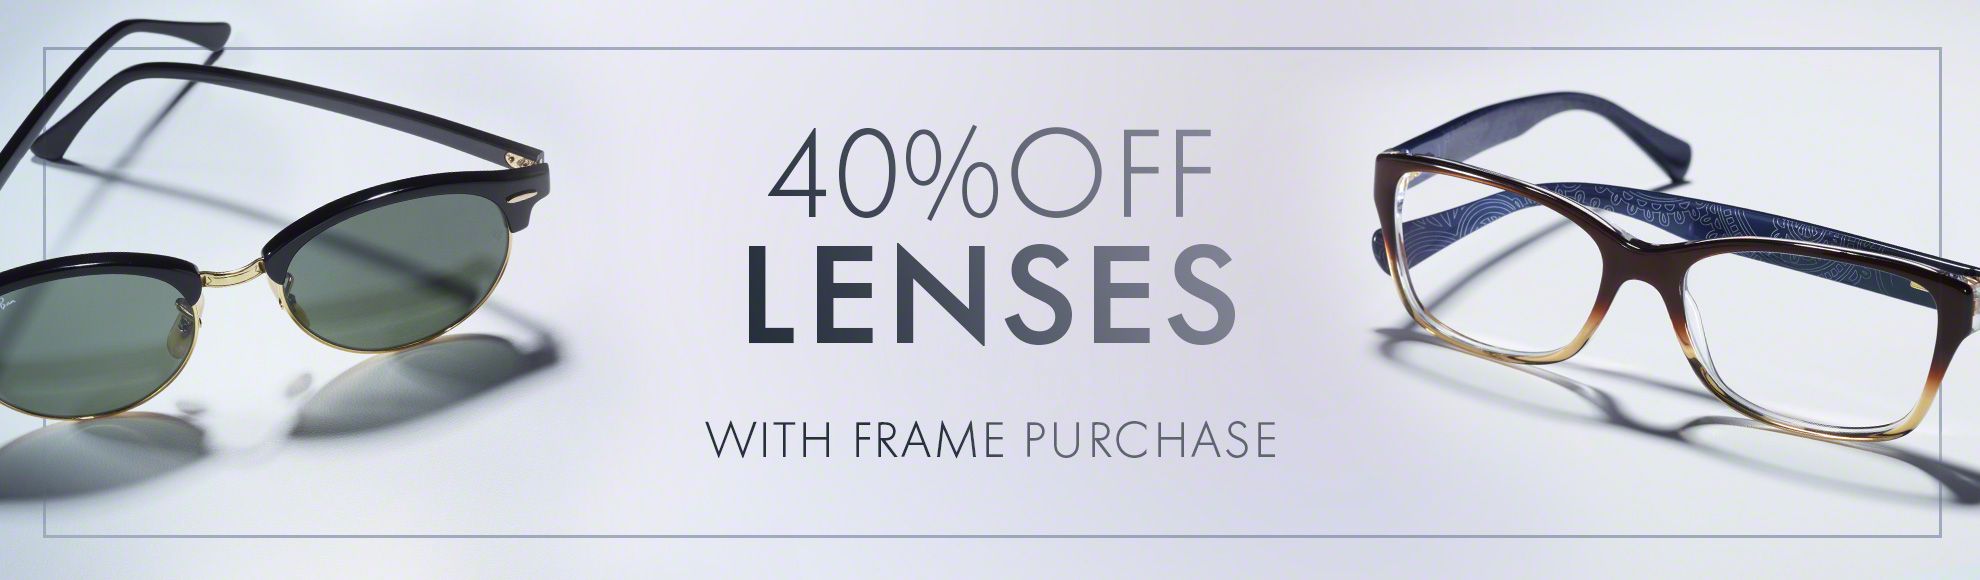 discount-eyeglasses-contact-lenses-lenscrafters